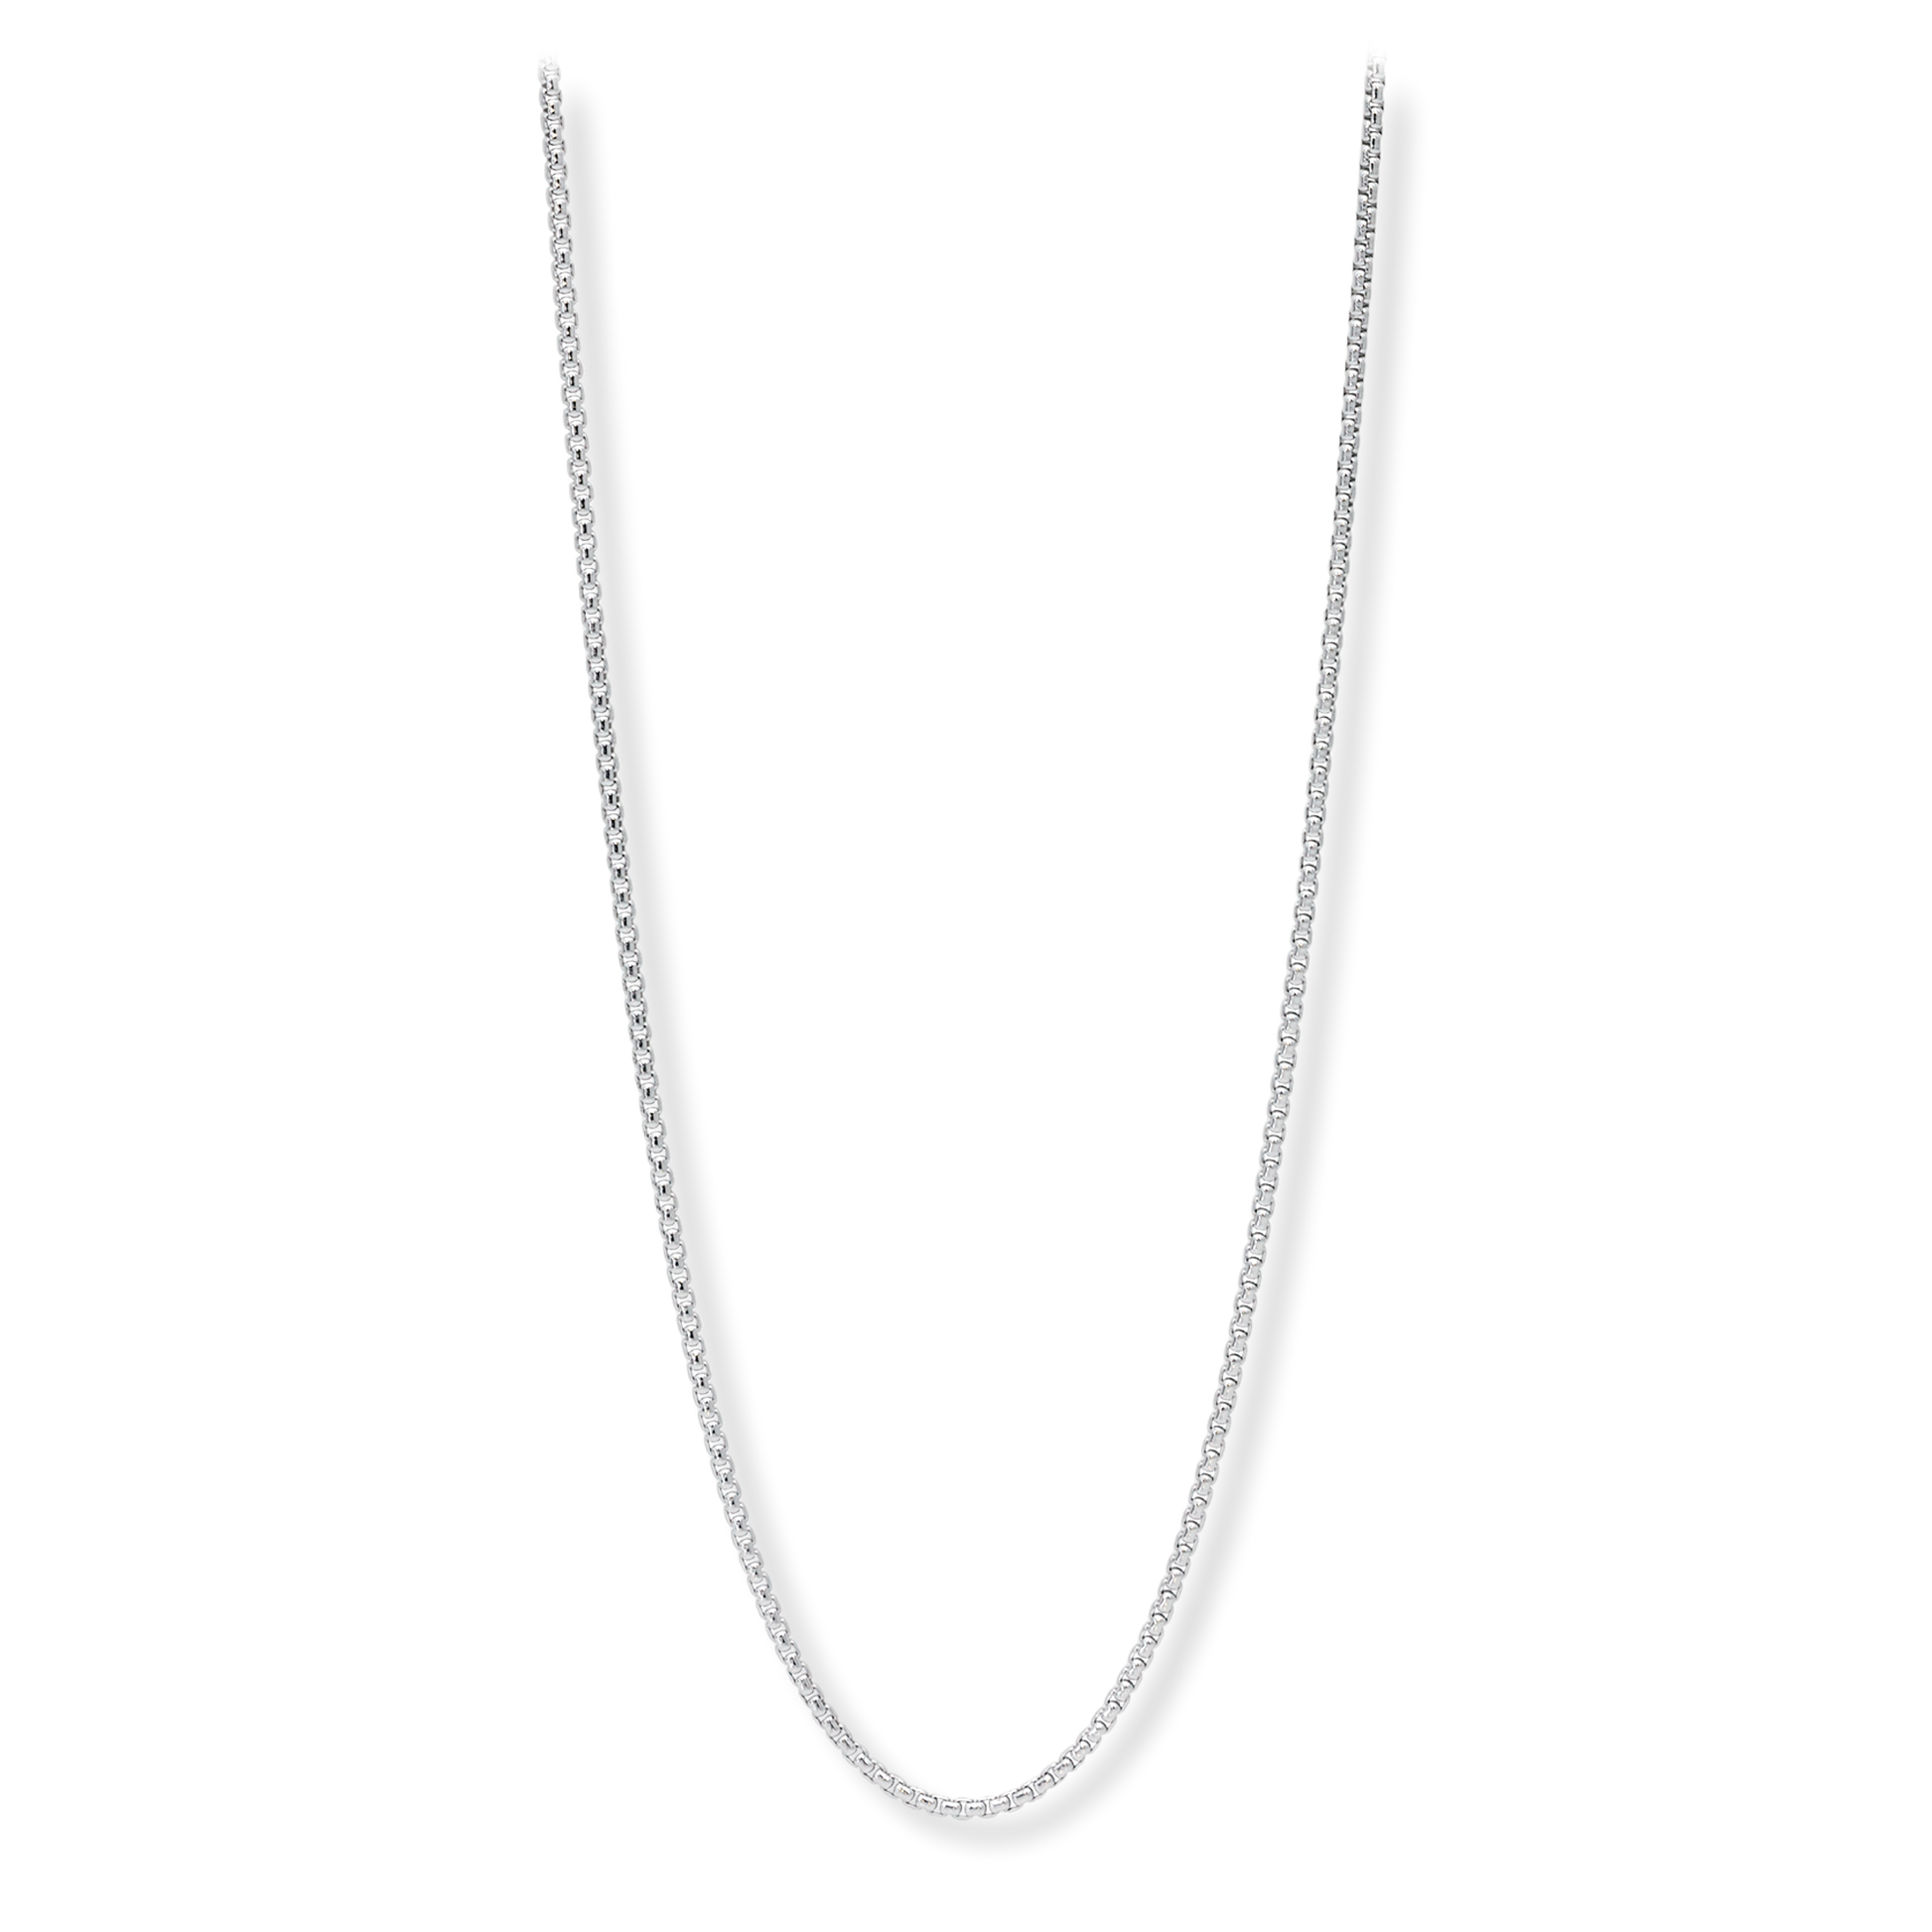 Franco Stellari Round Box Chain Necklace, 2mm